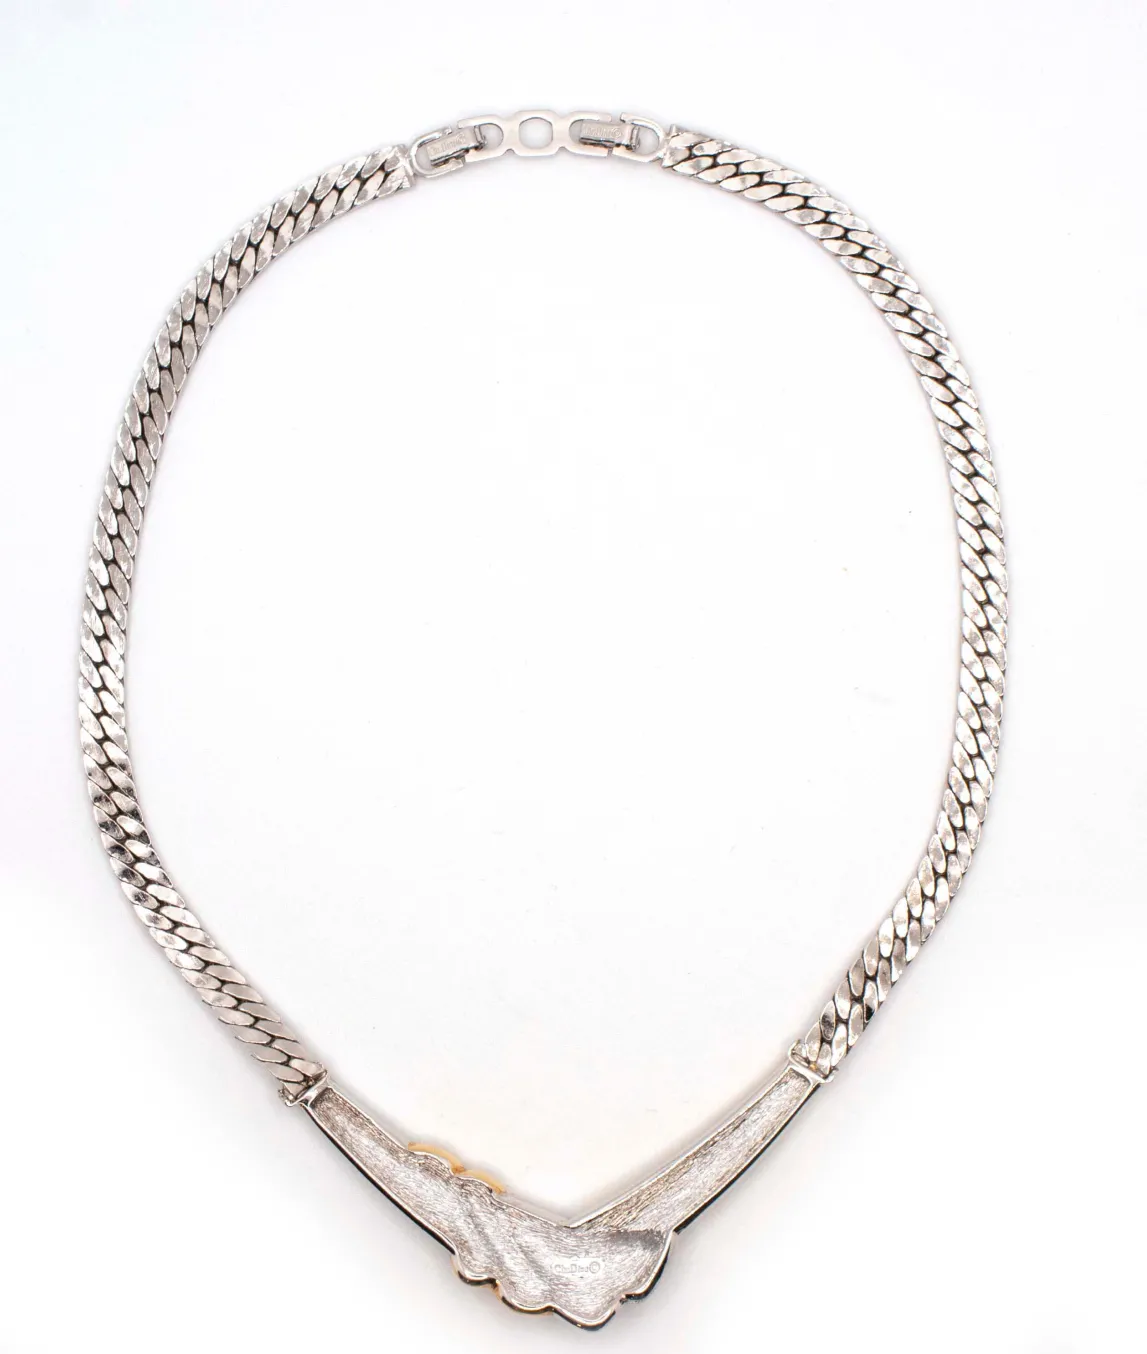 Christian Dior choker necklace silver tone reverse